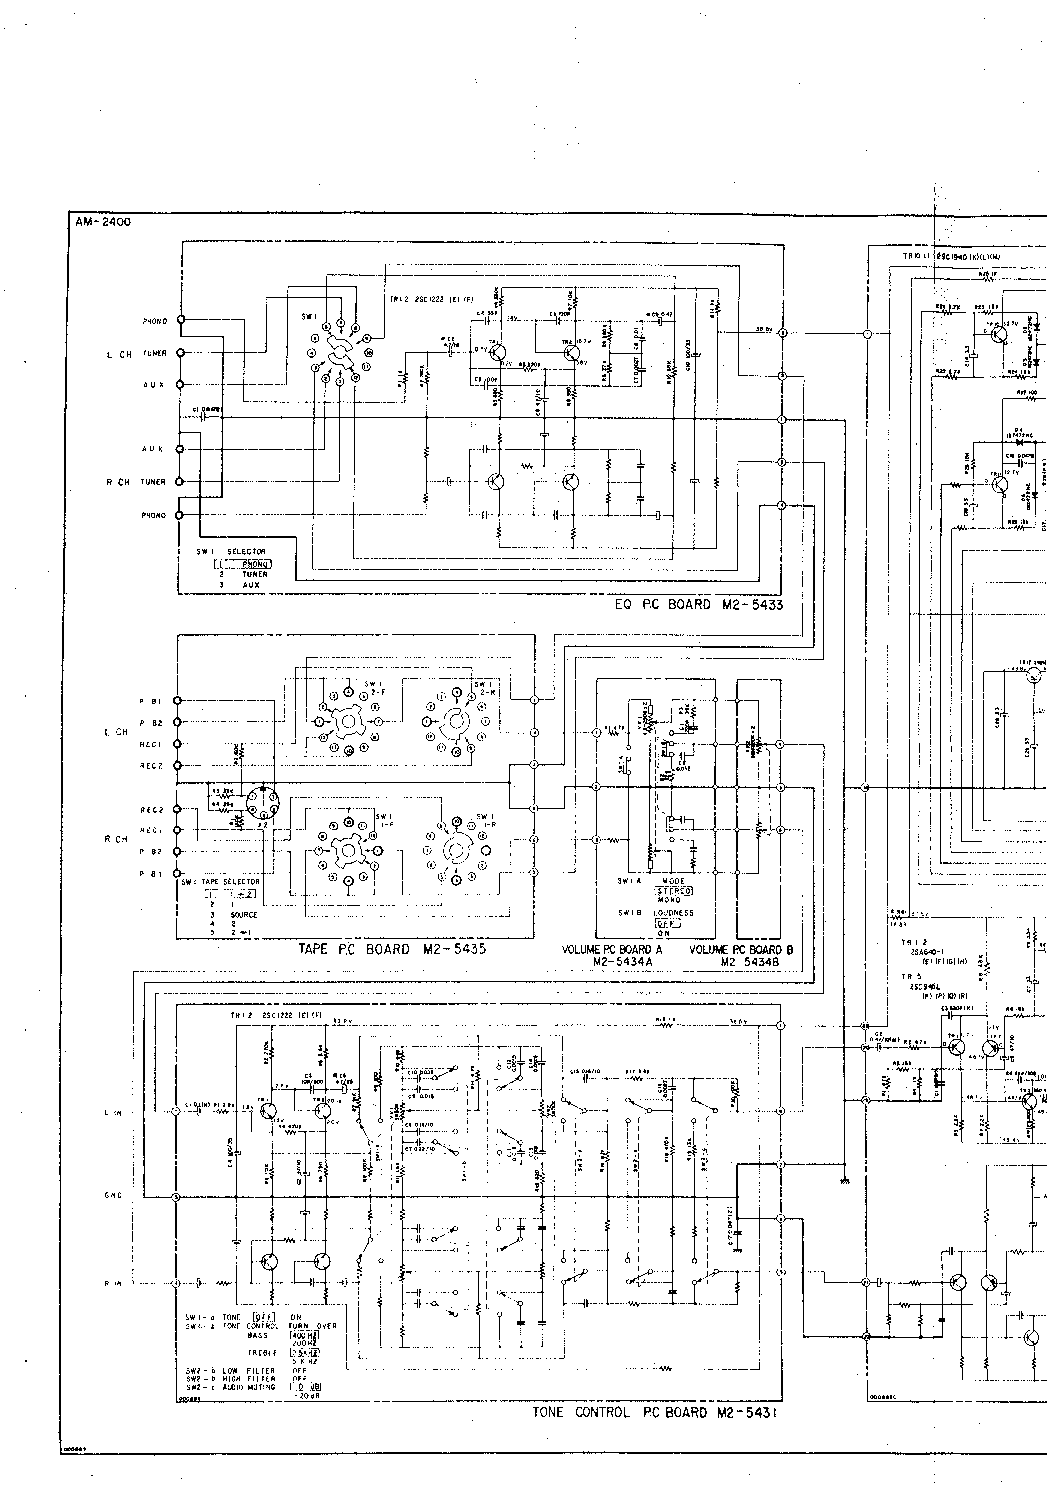 AKAI AM-2400 SCH 2 service manual (2nd page)